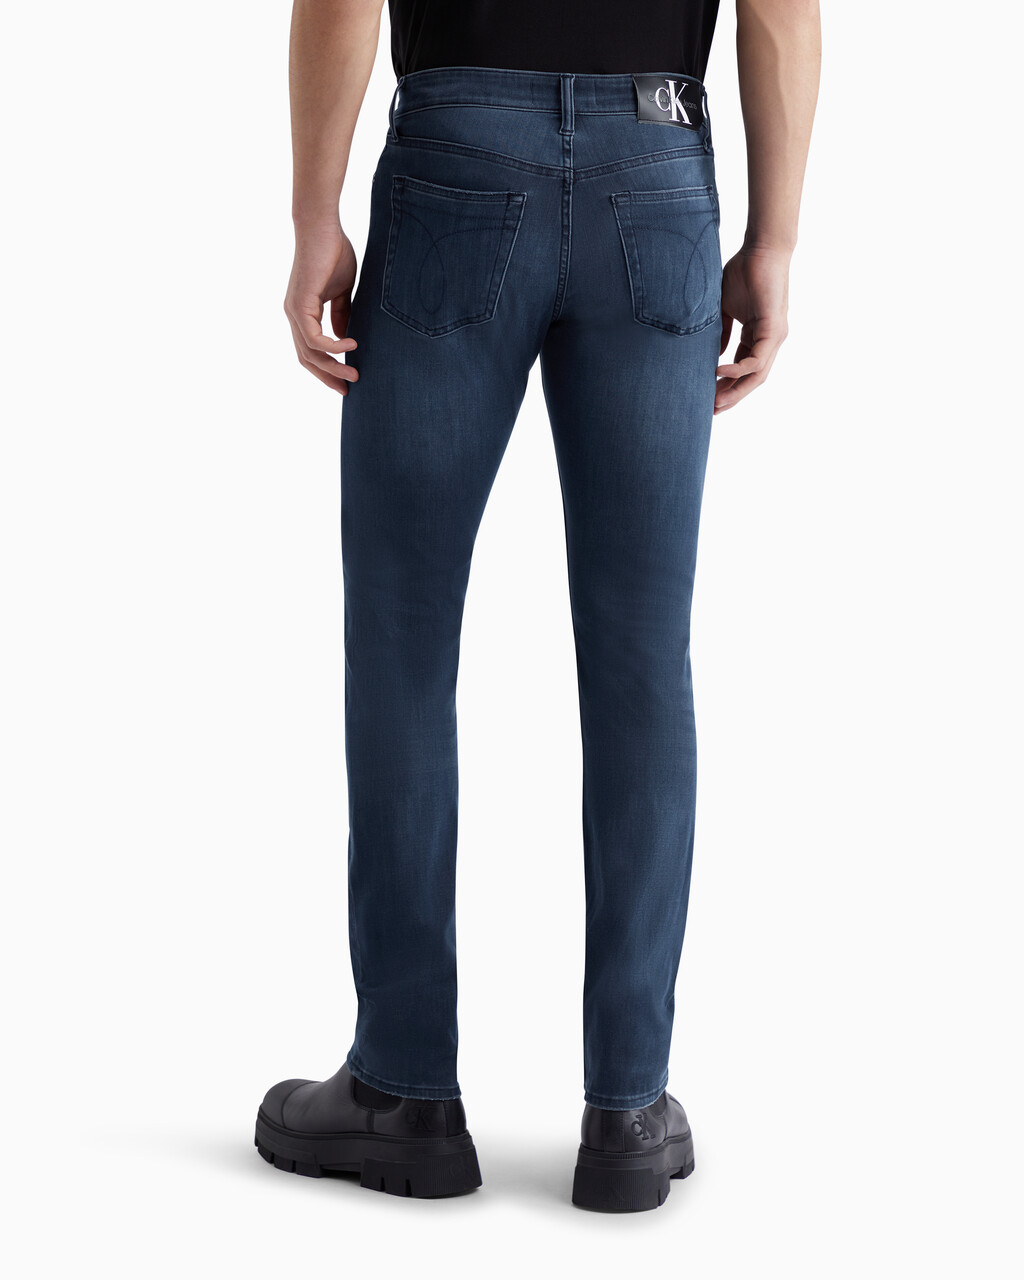 37.5 Bi-Stretch Slim Taper Jeans, Denim Dark, hi-res